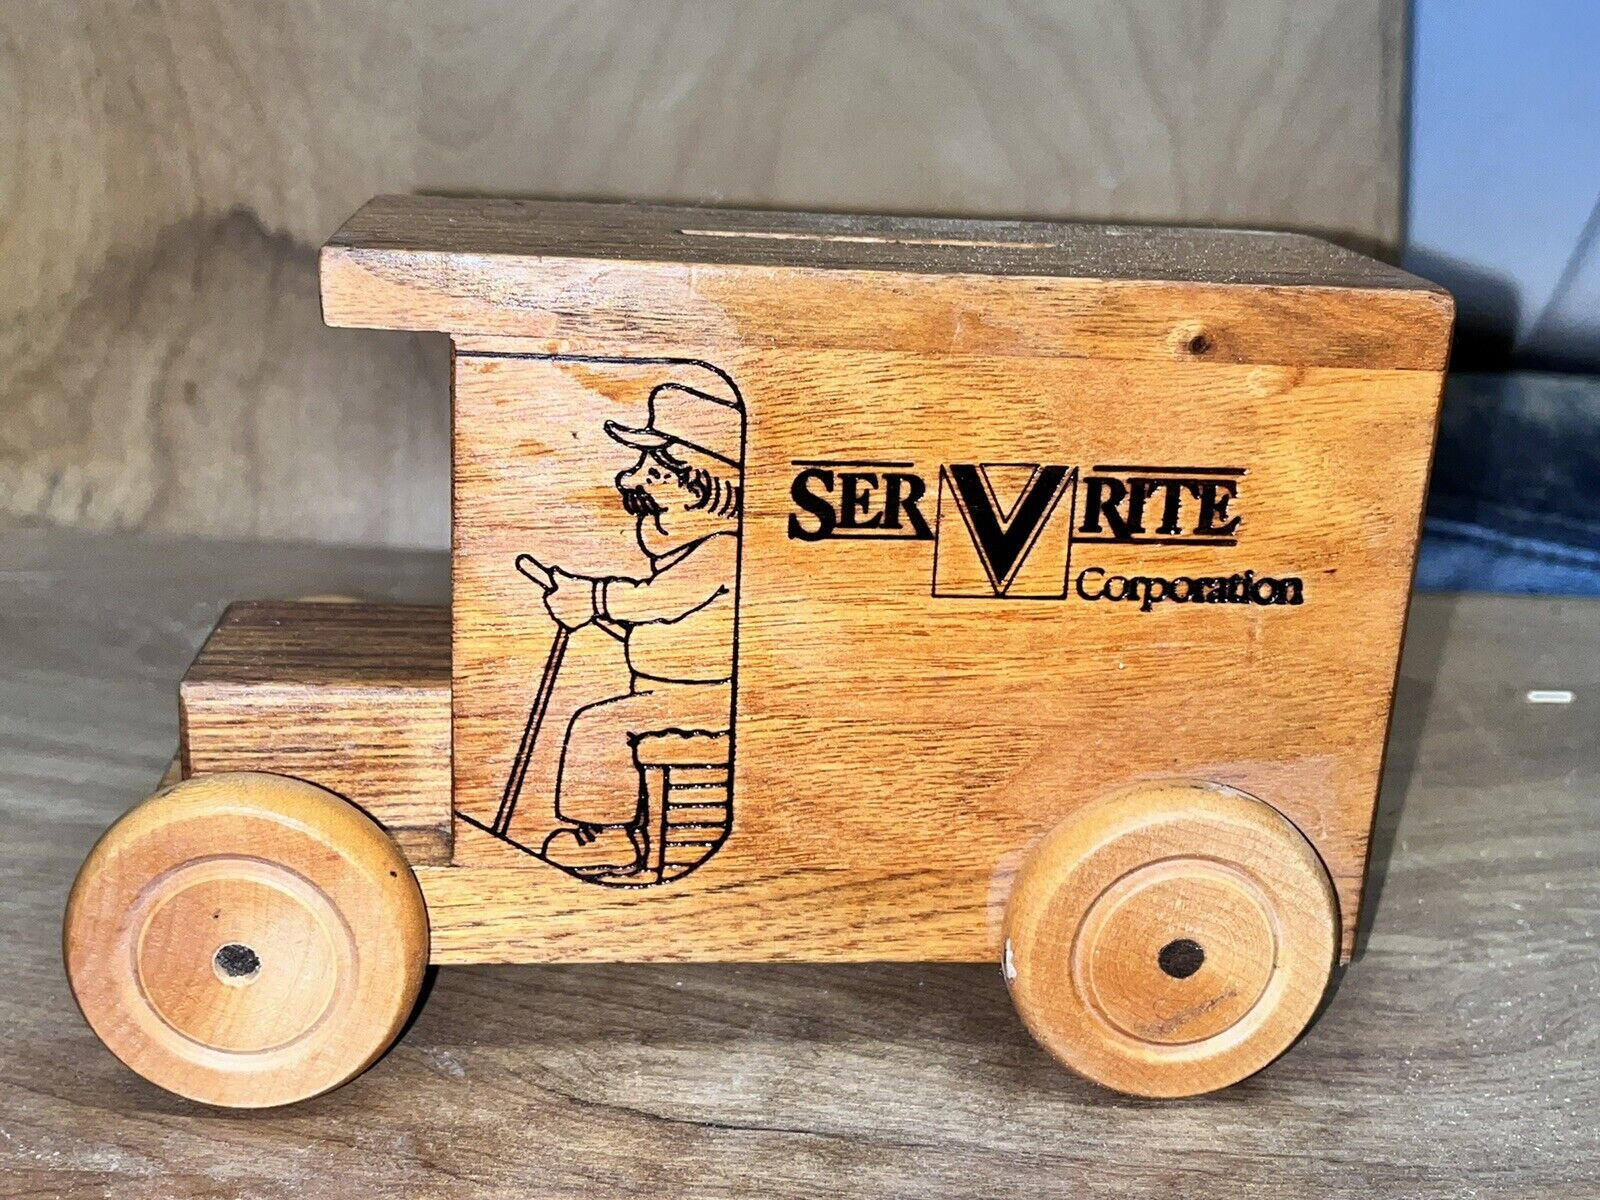 Servrite Corporation 1990 Logomobile Wooden Truck Coin Bank Toy